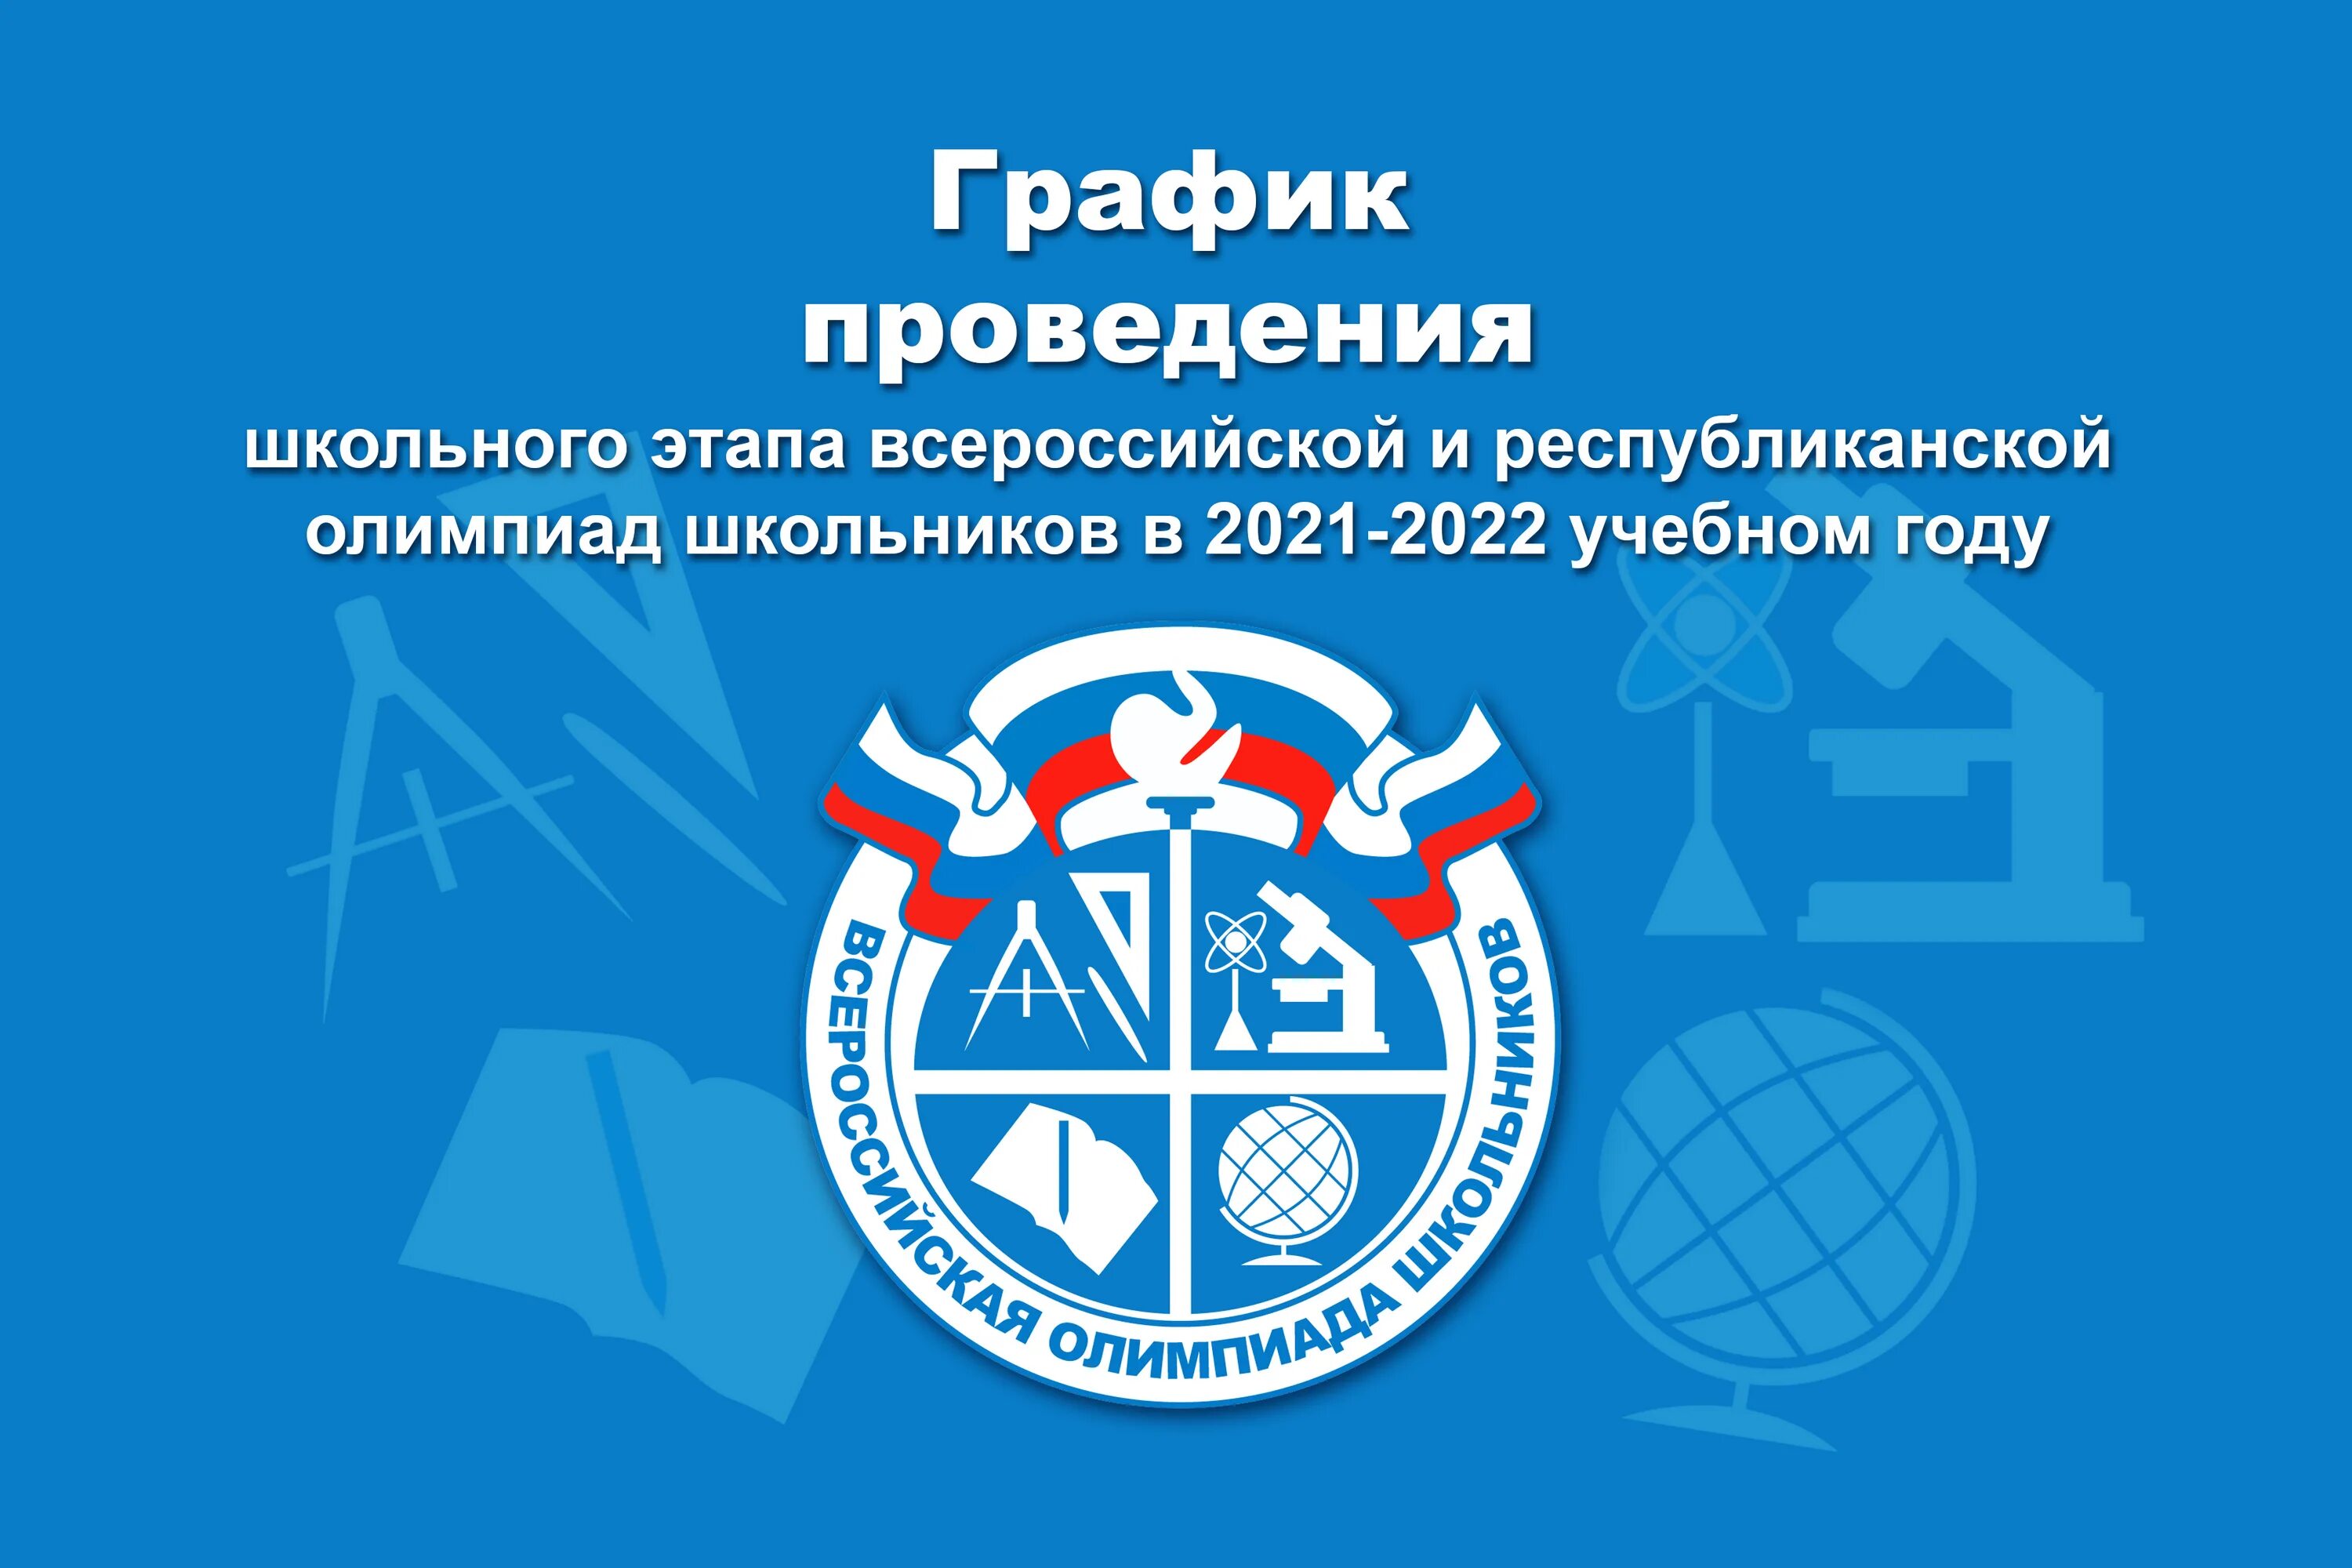 Логотип ВСОШ 2021-2022. Олимпиады школьников пермского края